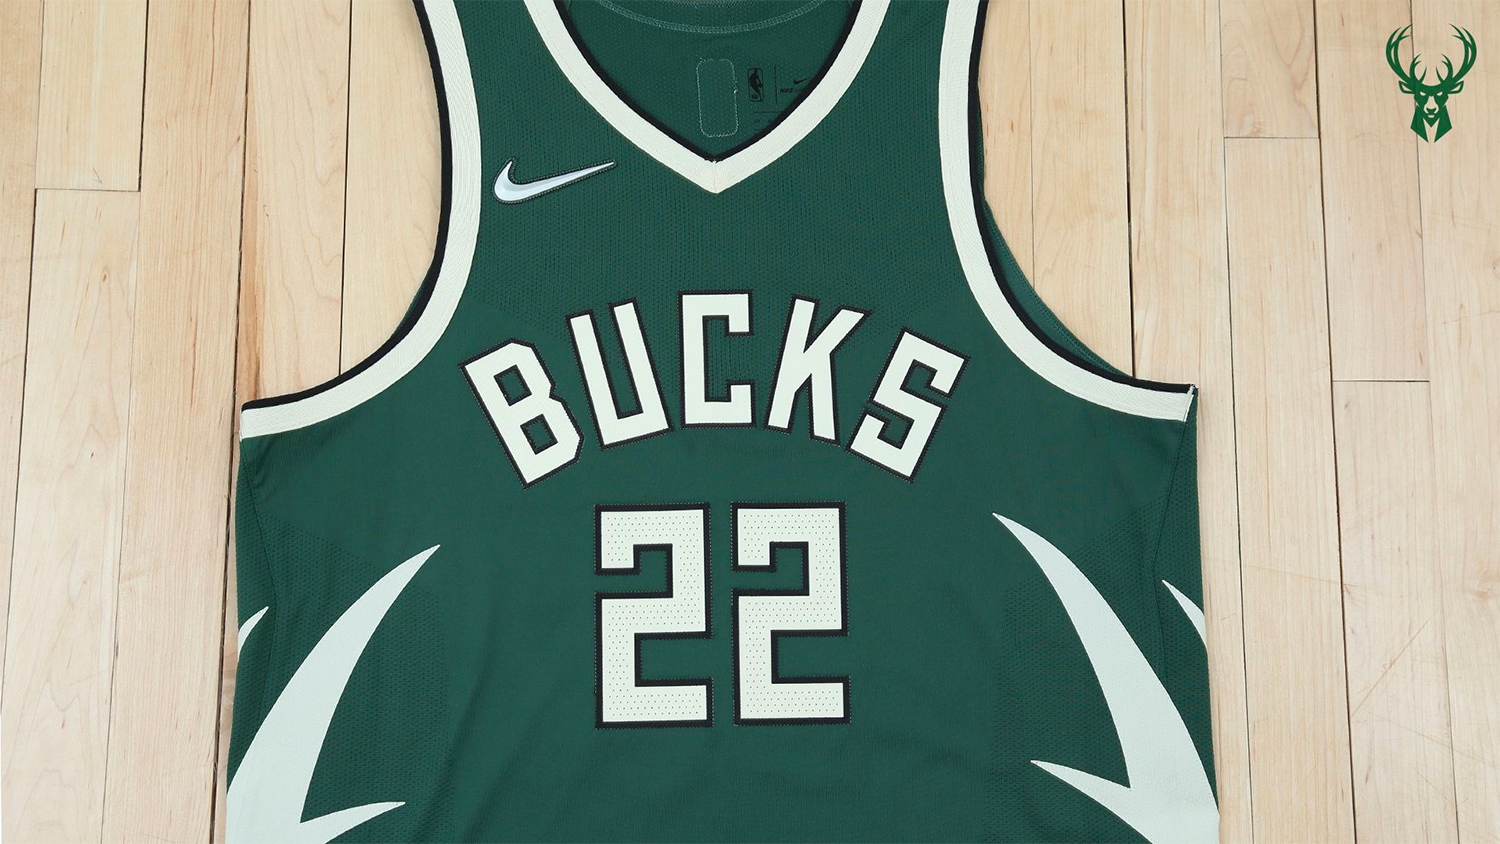 Milwaukee Bucks unveil Earned Edition uniform for 2020-21 season